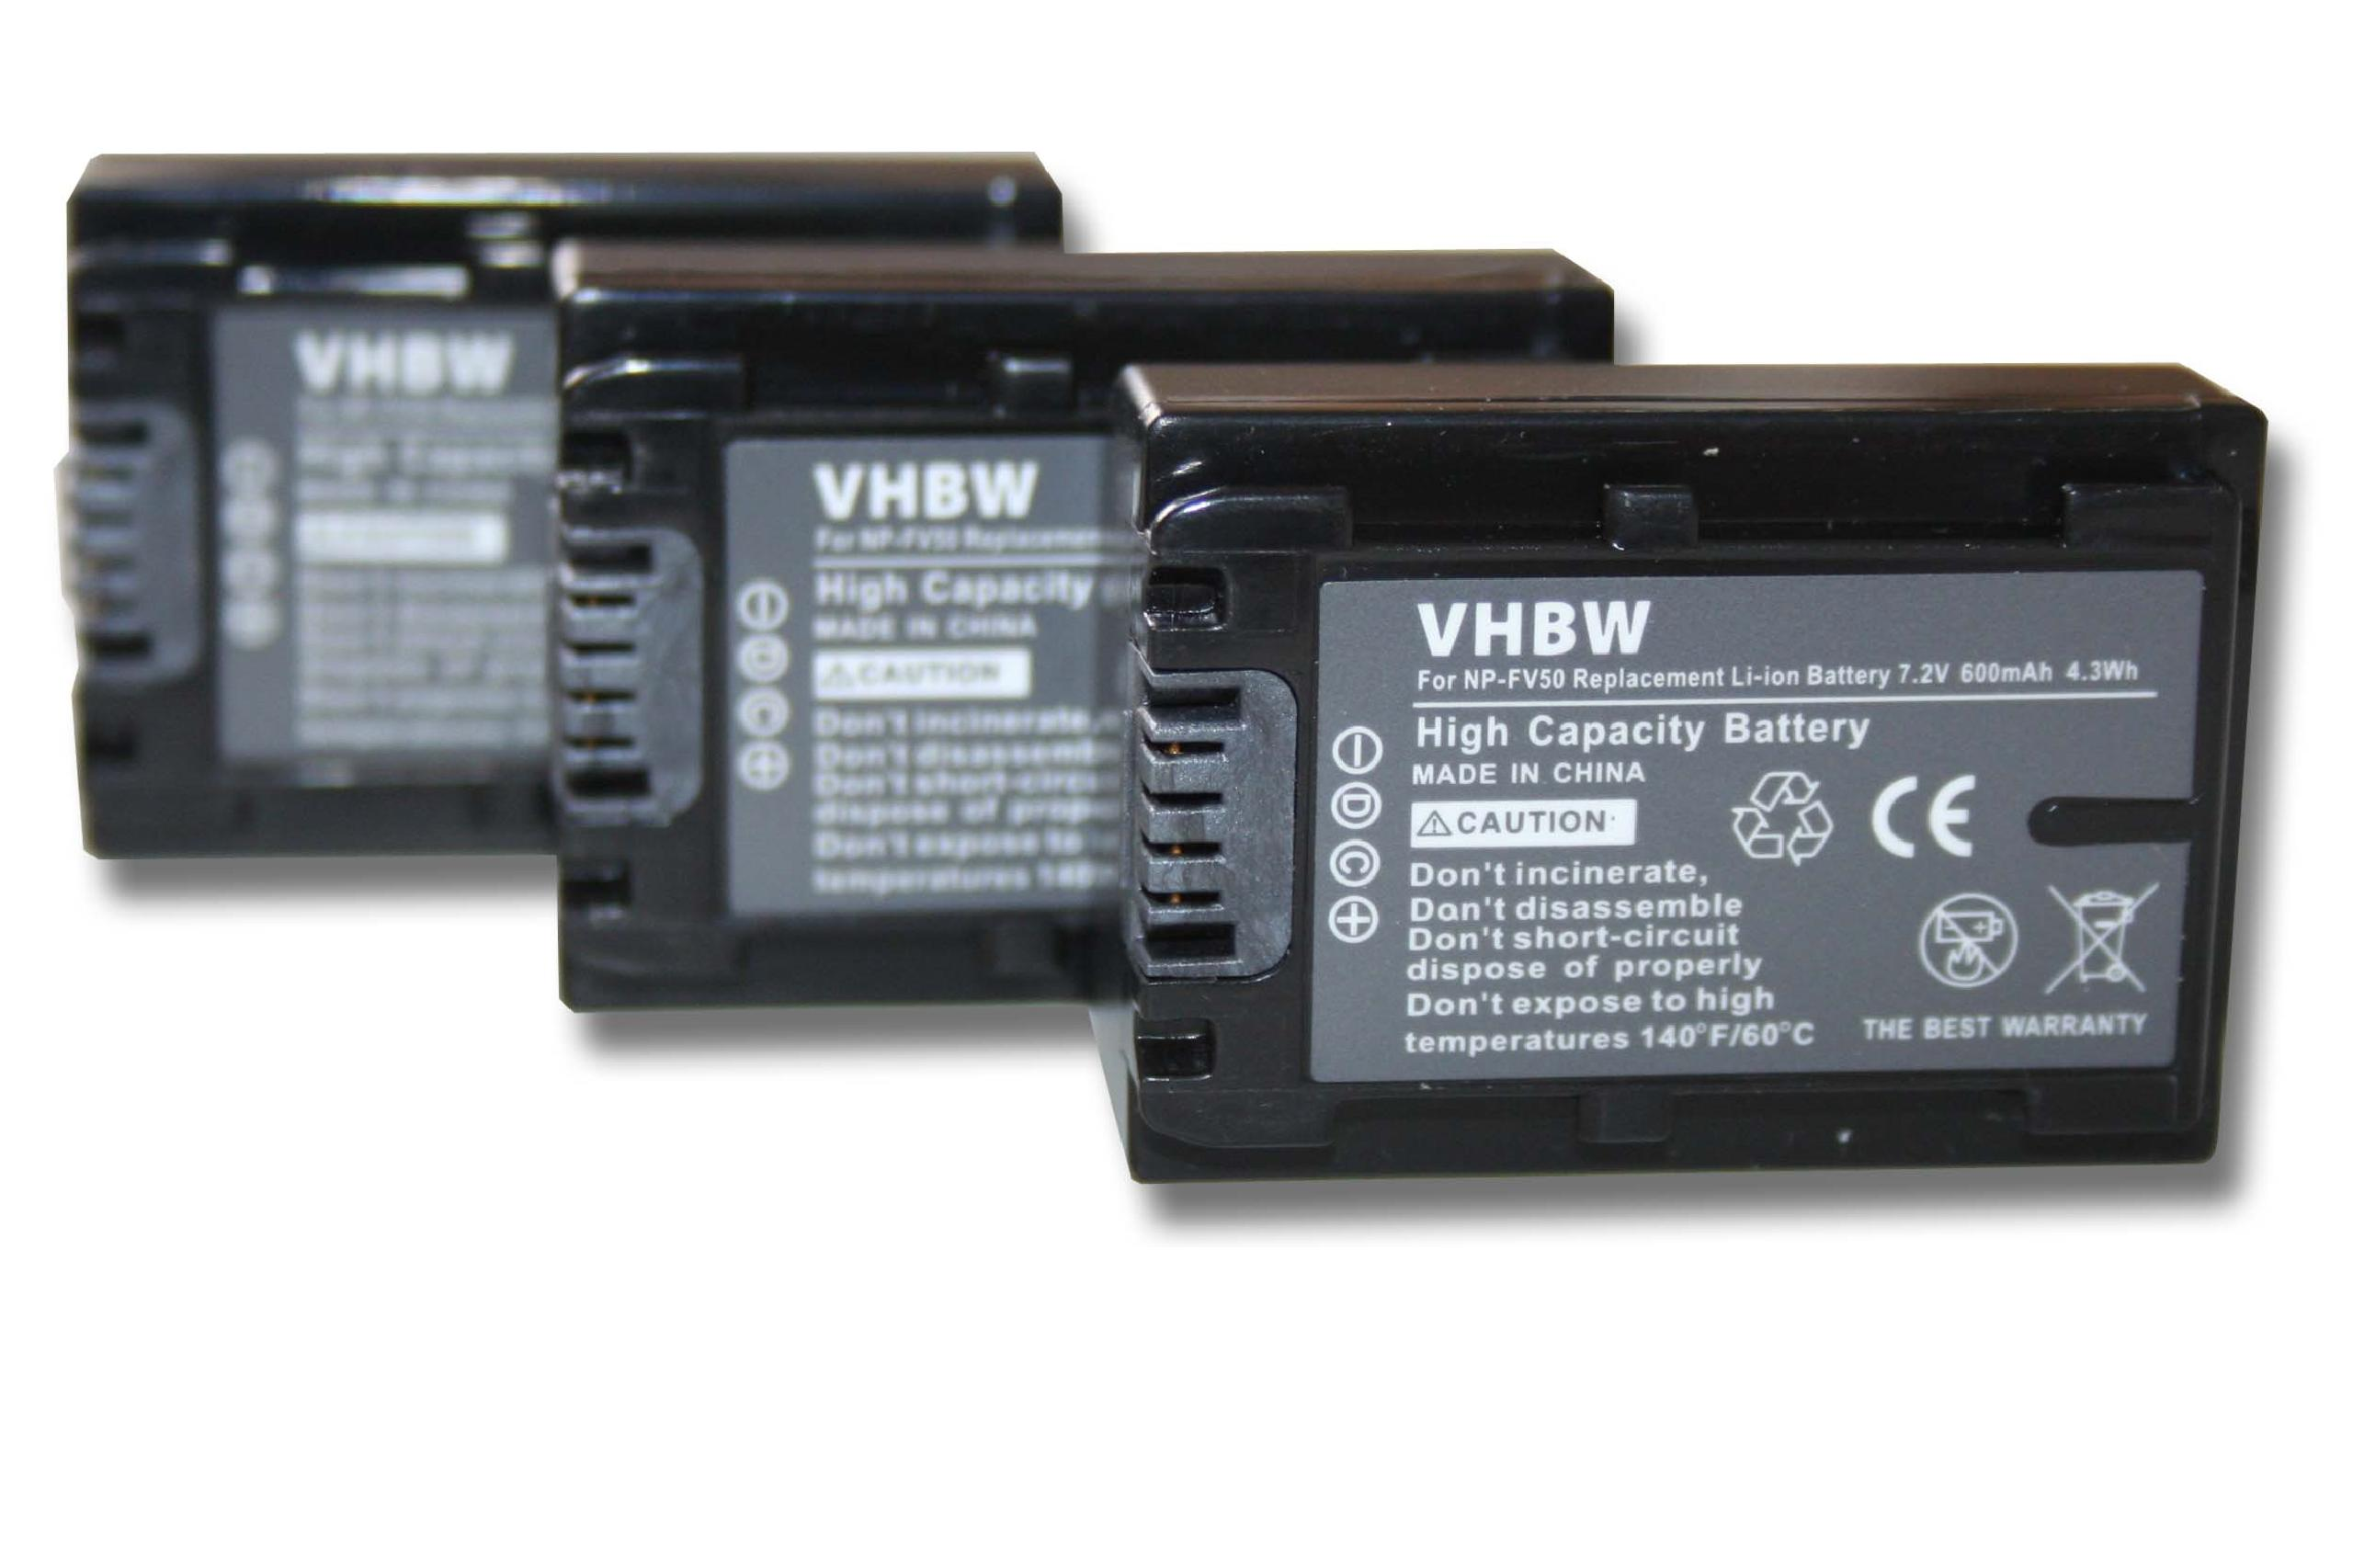 HDR-CX160, HDR-CX Serie Li-Ion 600 Videokamera, Volt, VHBW Sony HDR-CX155E, Akku - HDR-CX150E, HDR-CX130ES mit 7.2 kompatibel